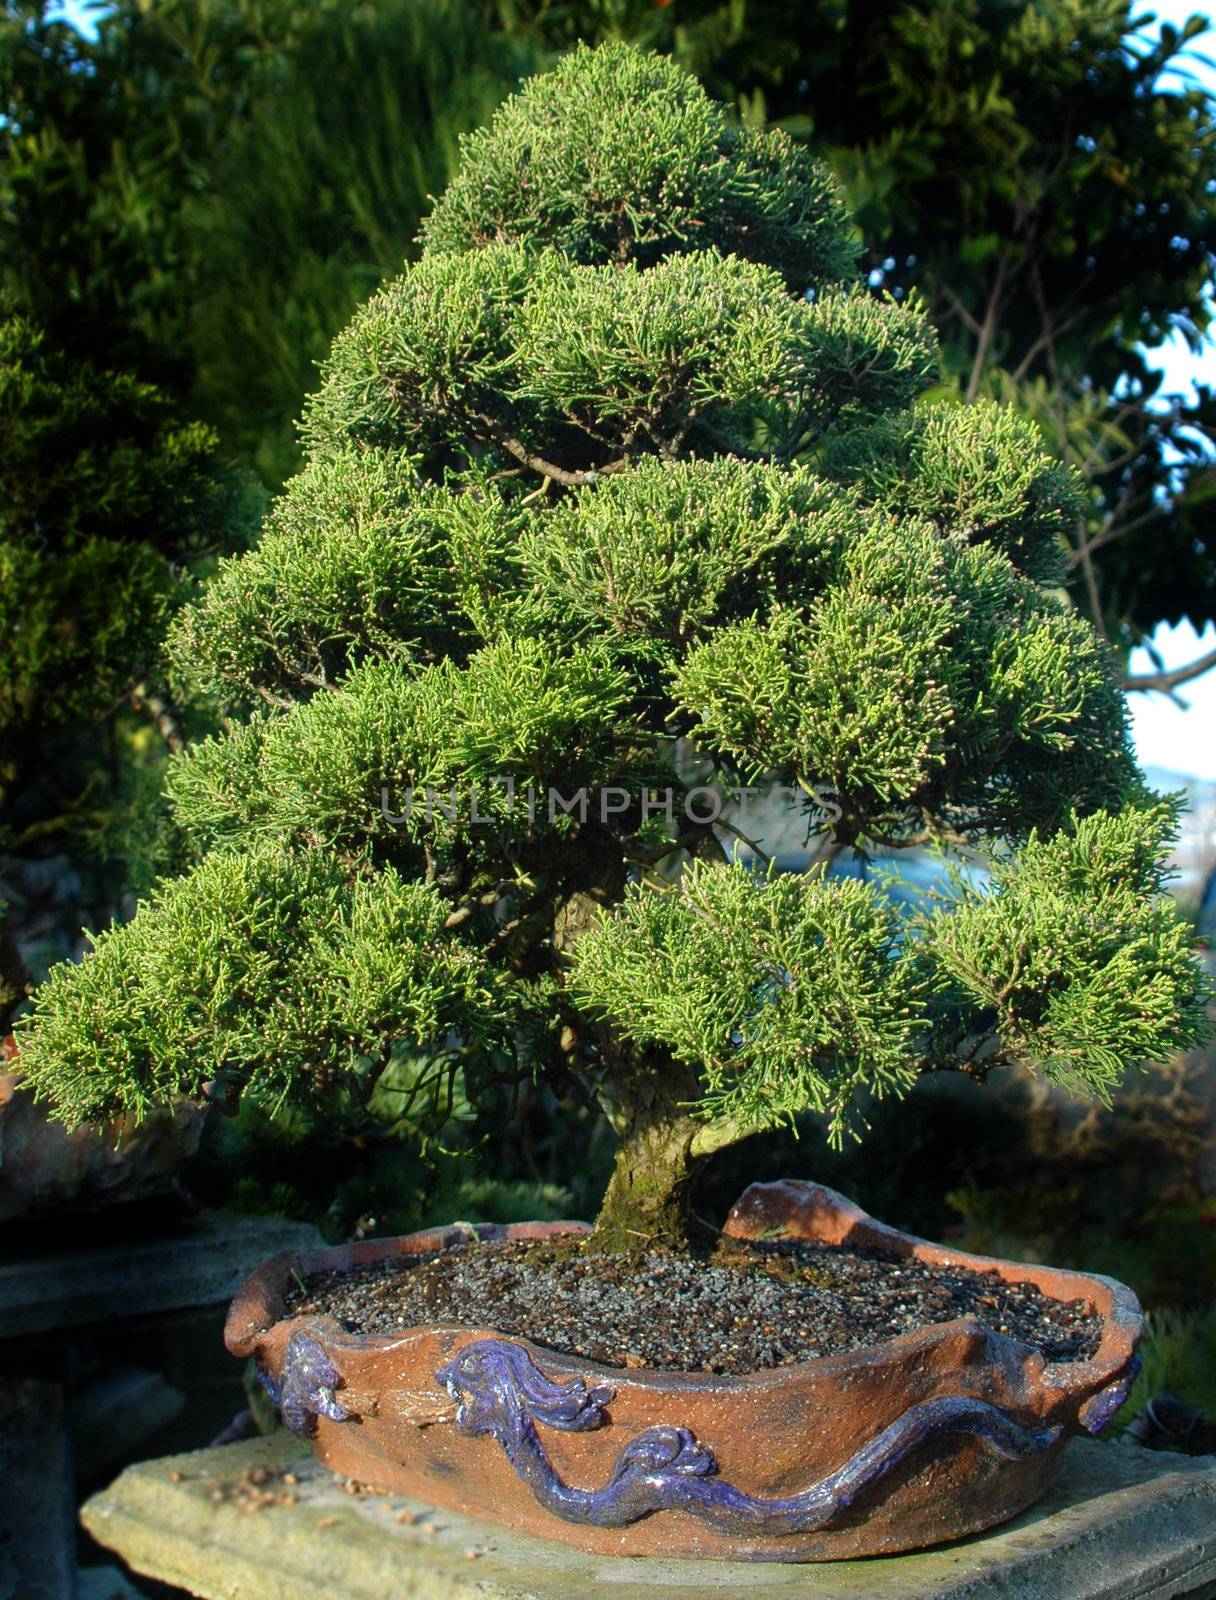 bonsai, small tree in a pot 